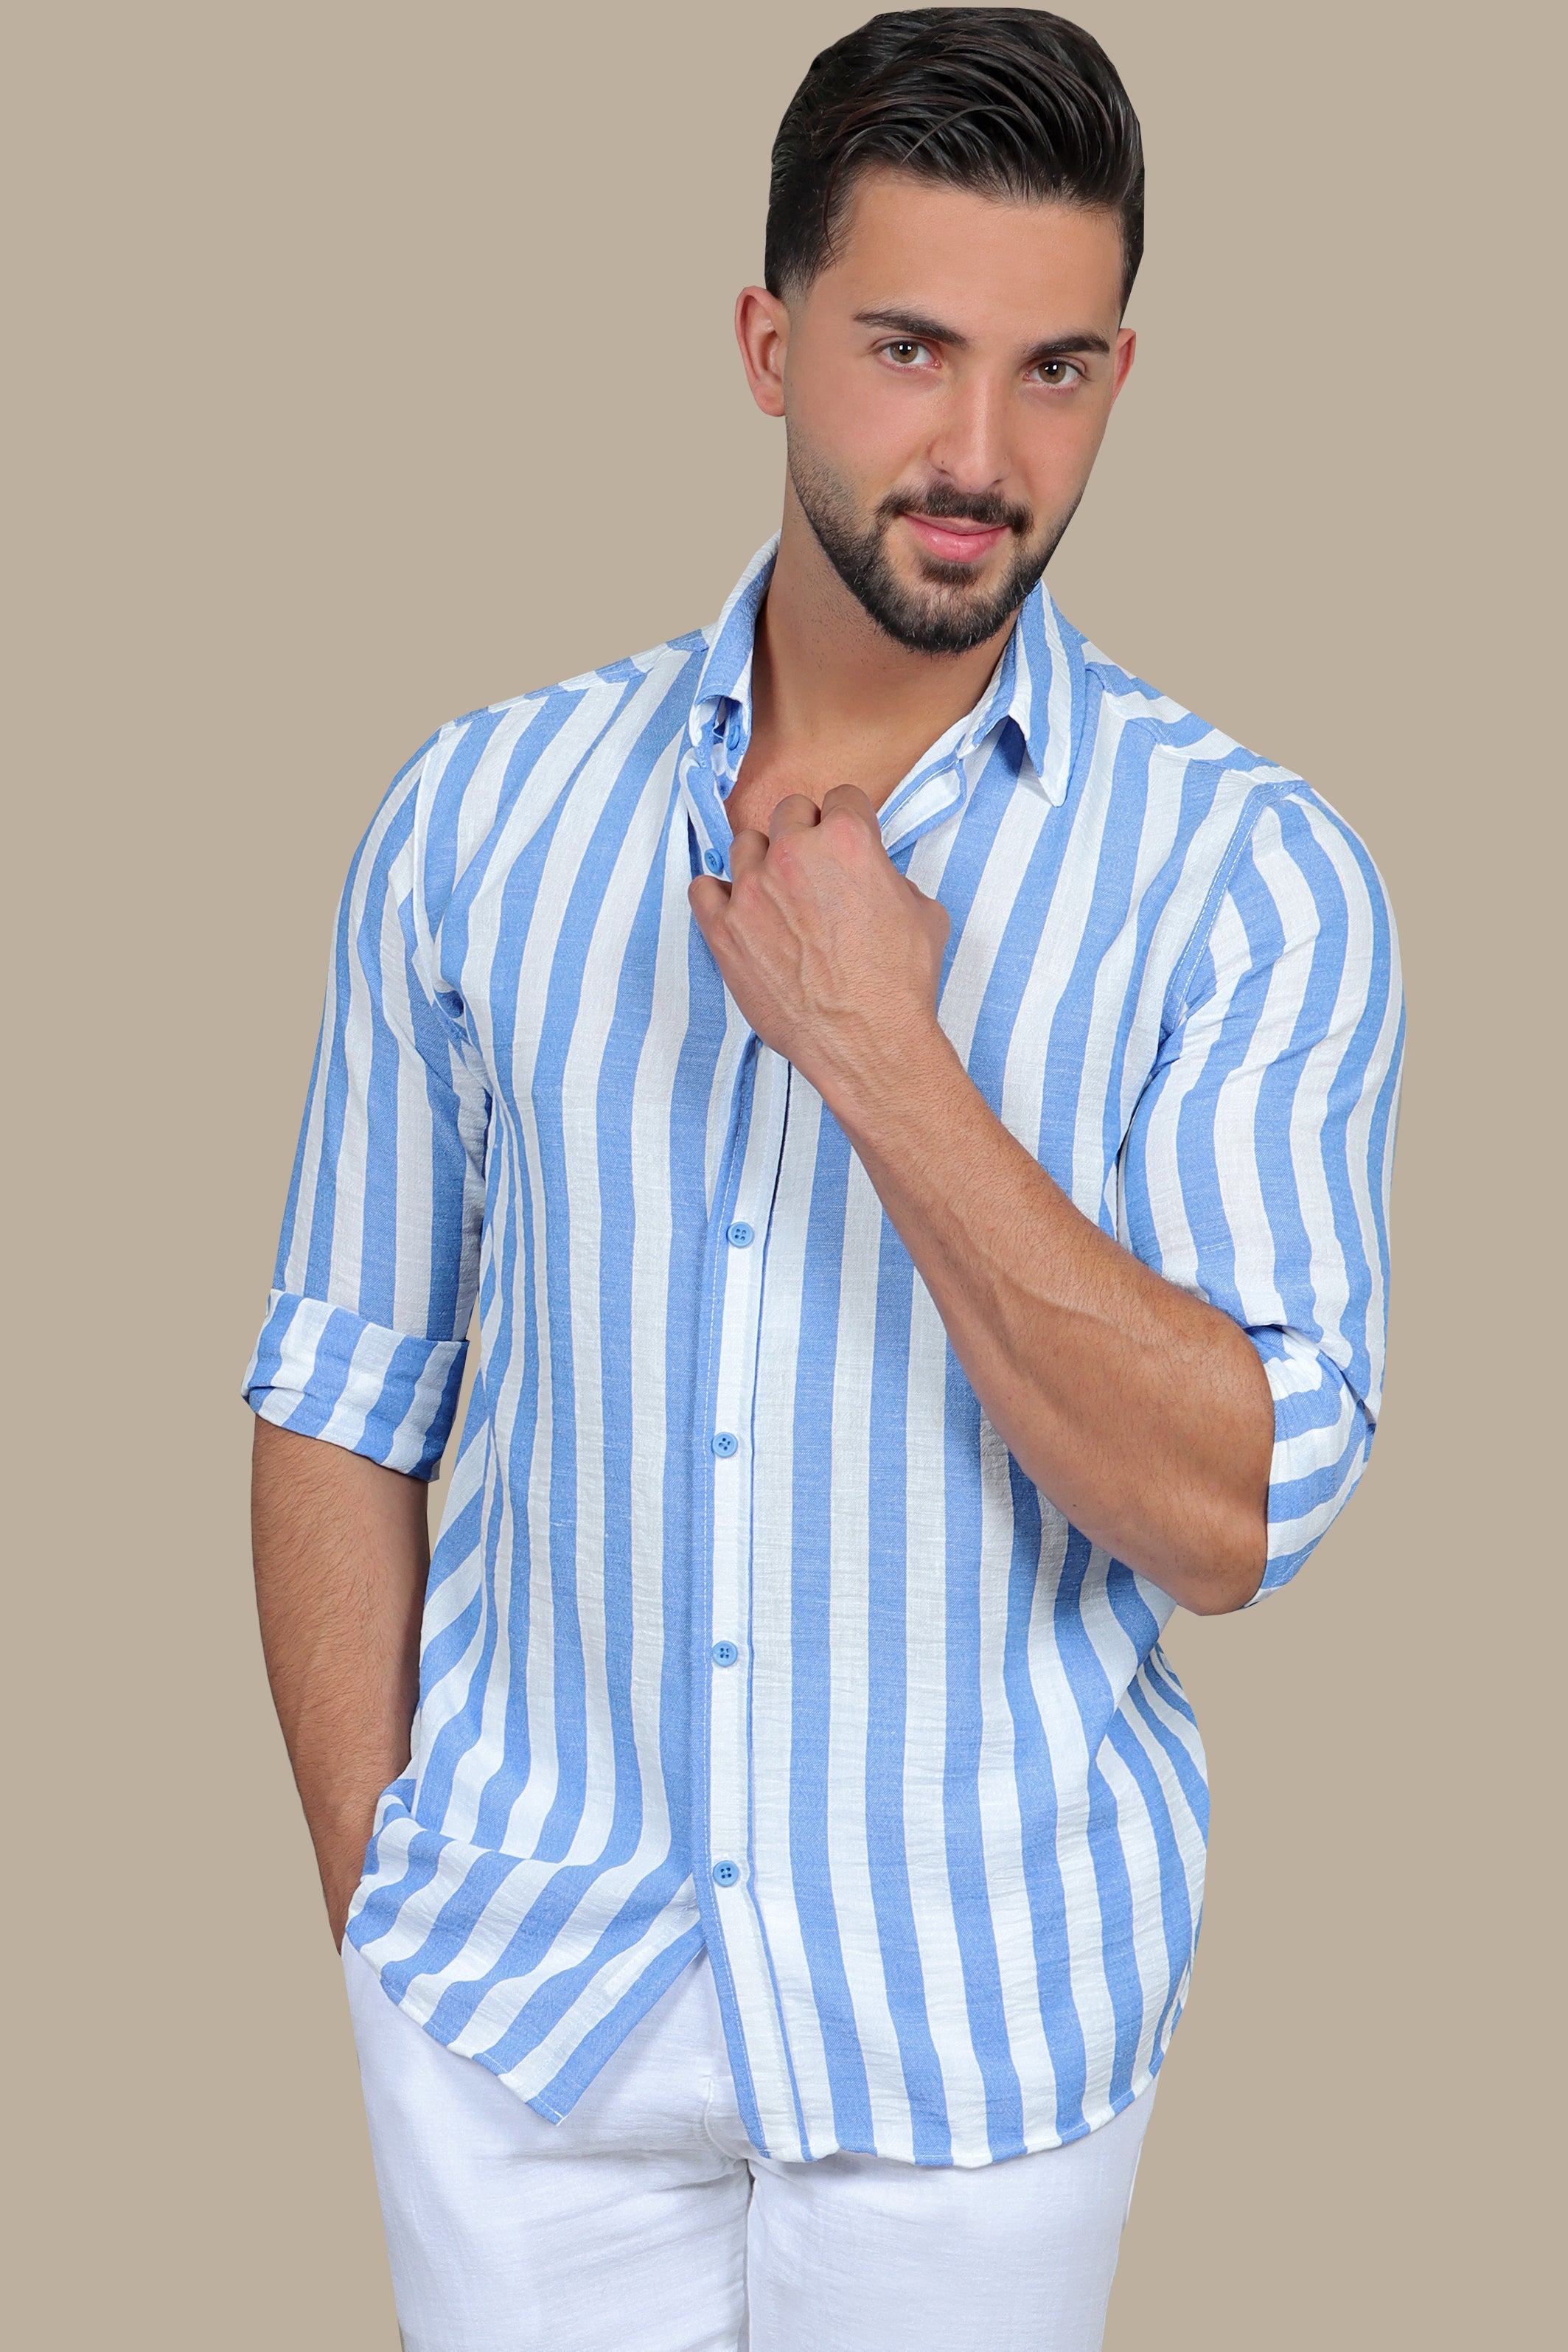 Blue Skies Stripes: Linen Shirt with a Nautical Twist